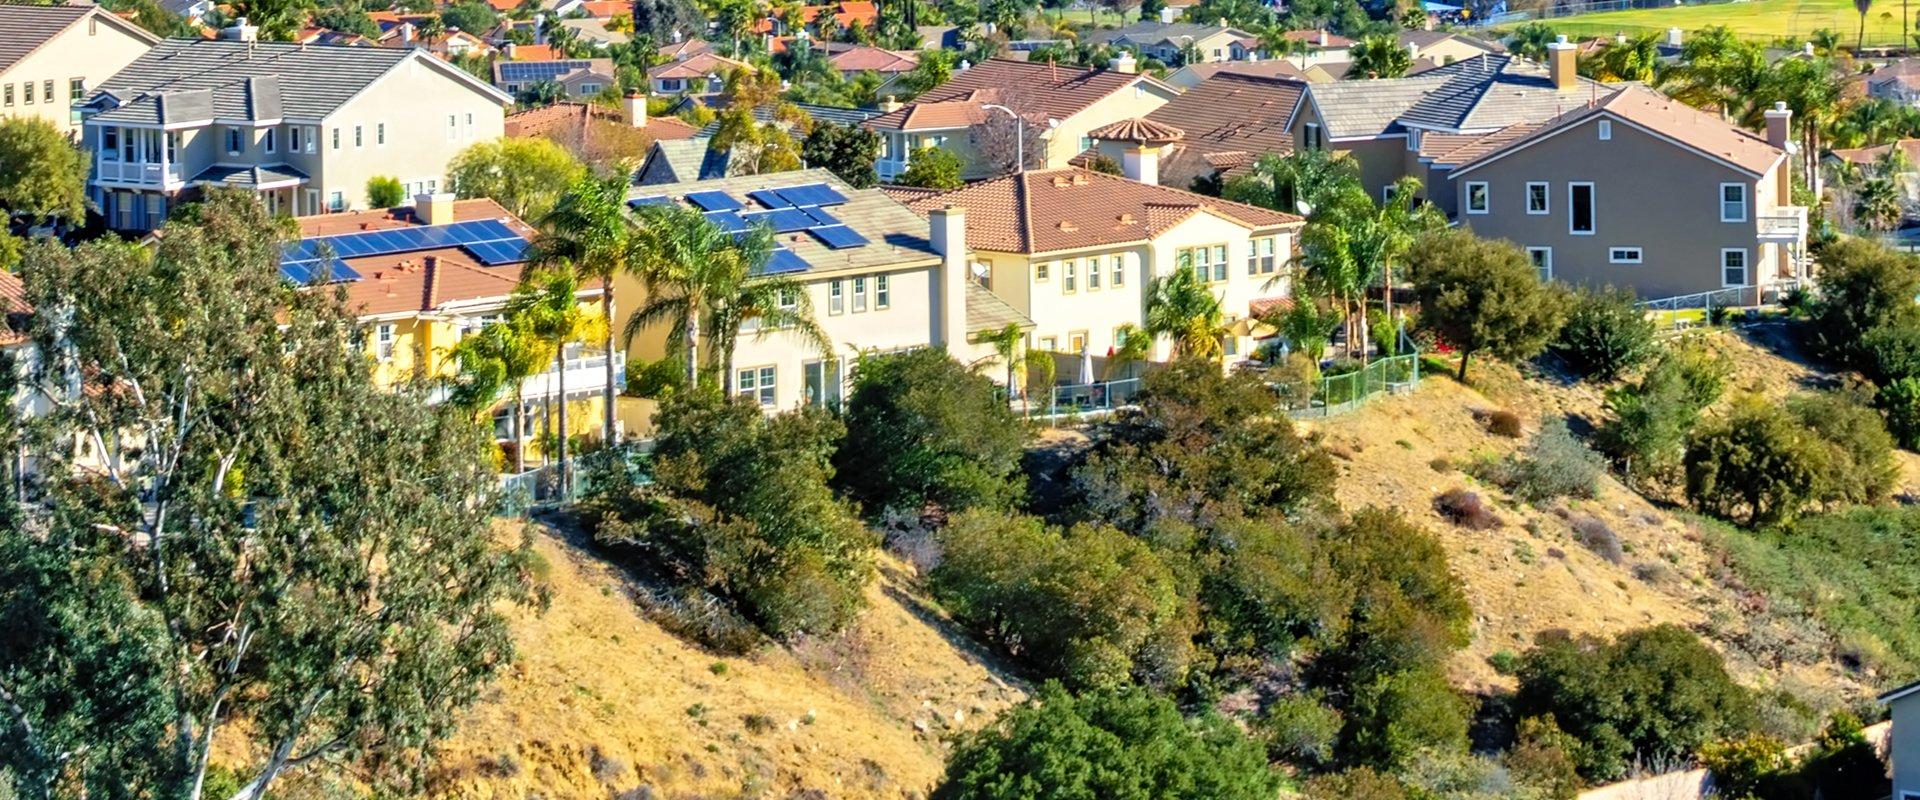 homes near pasadena california